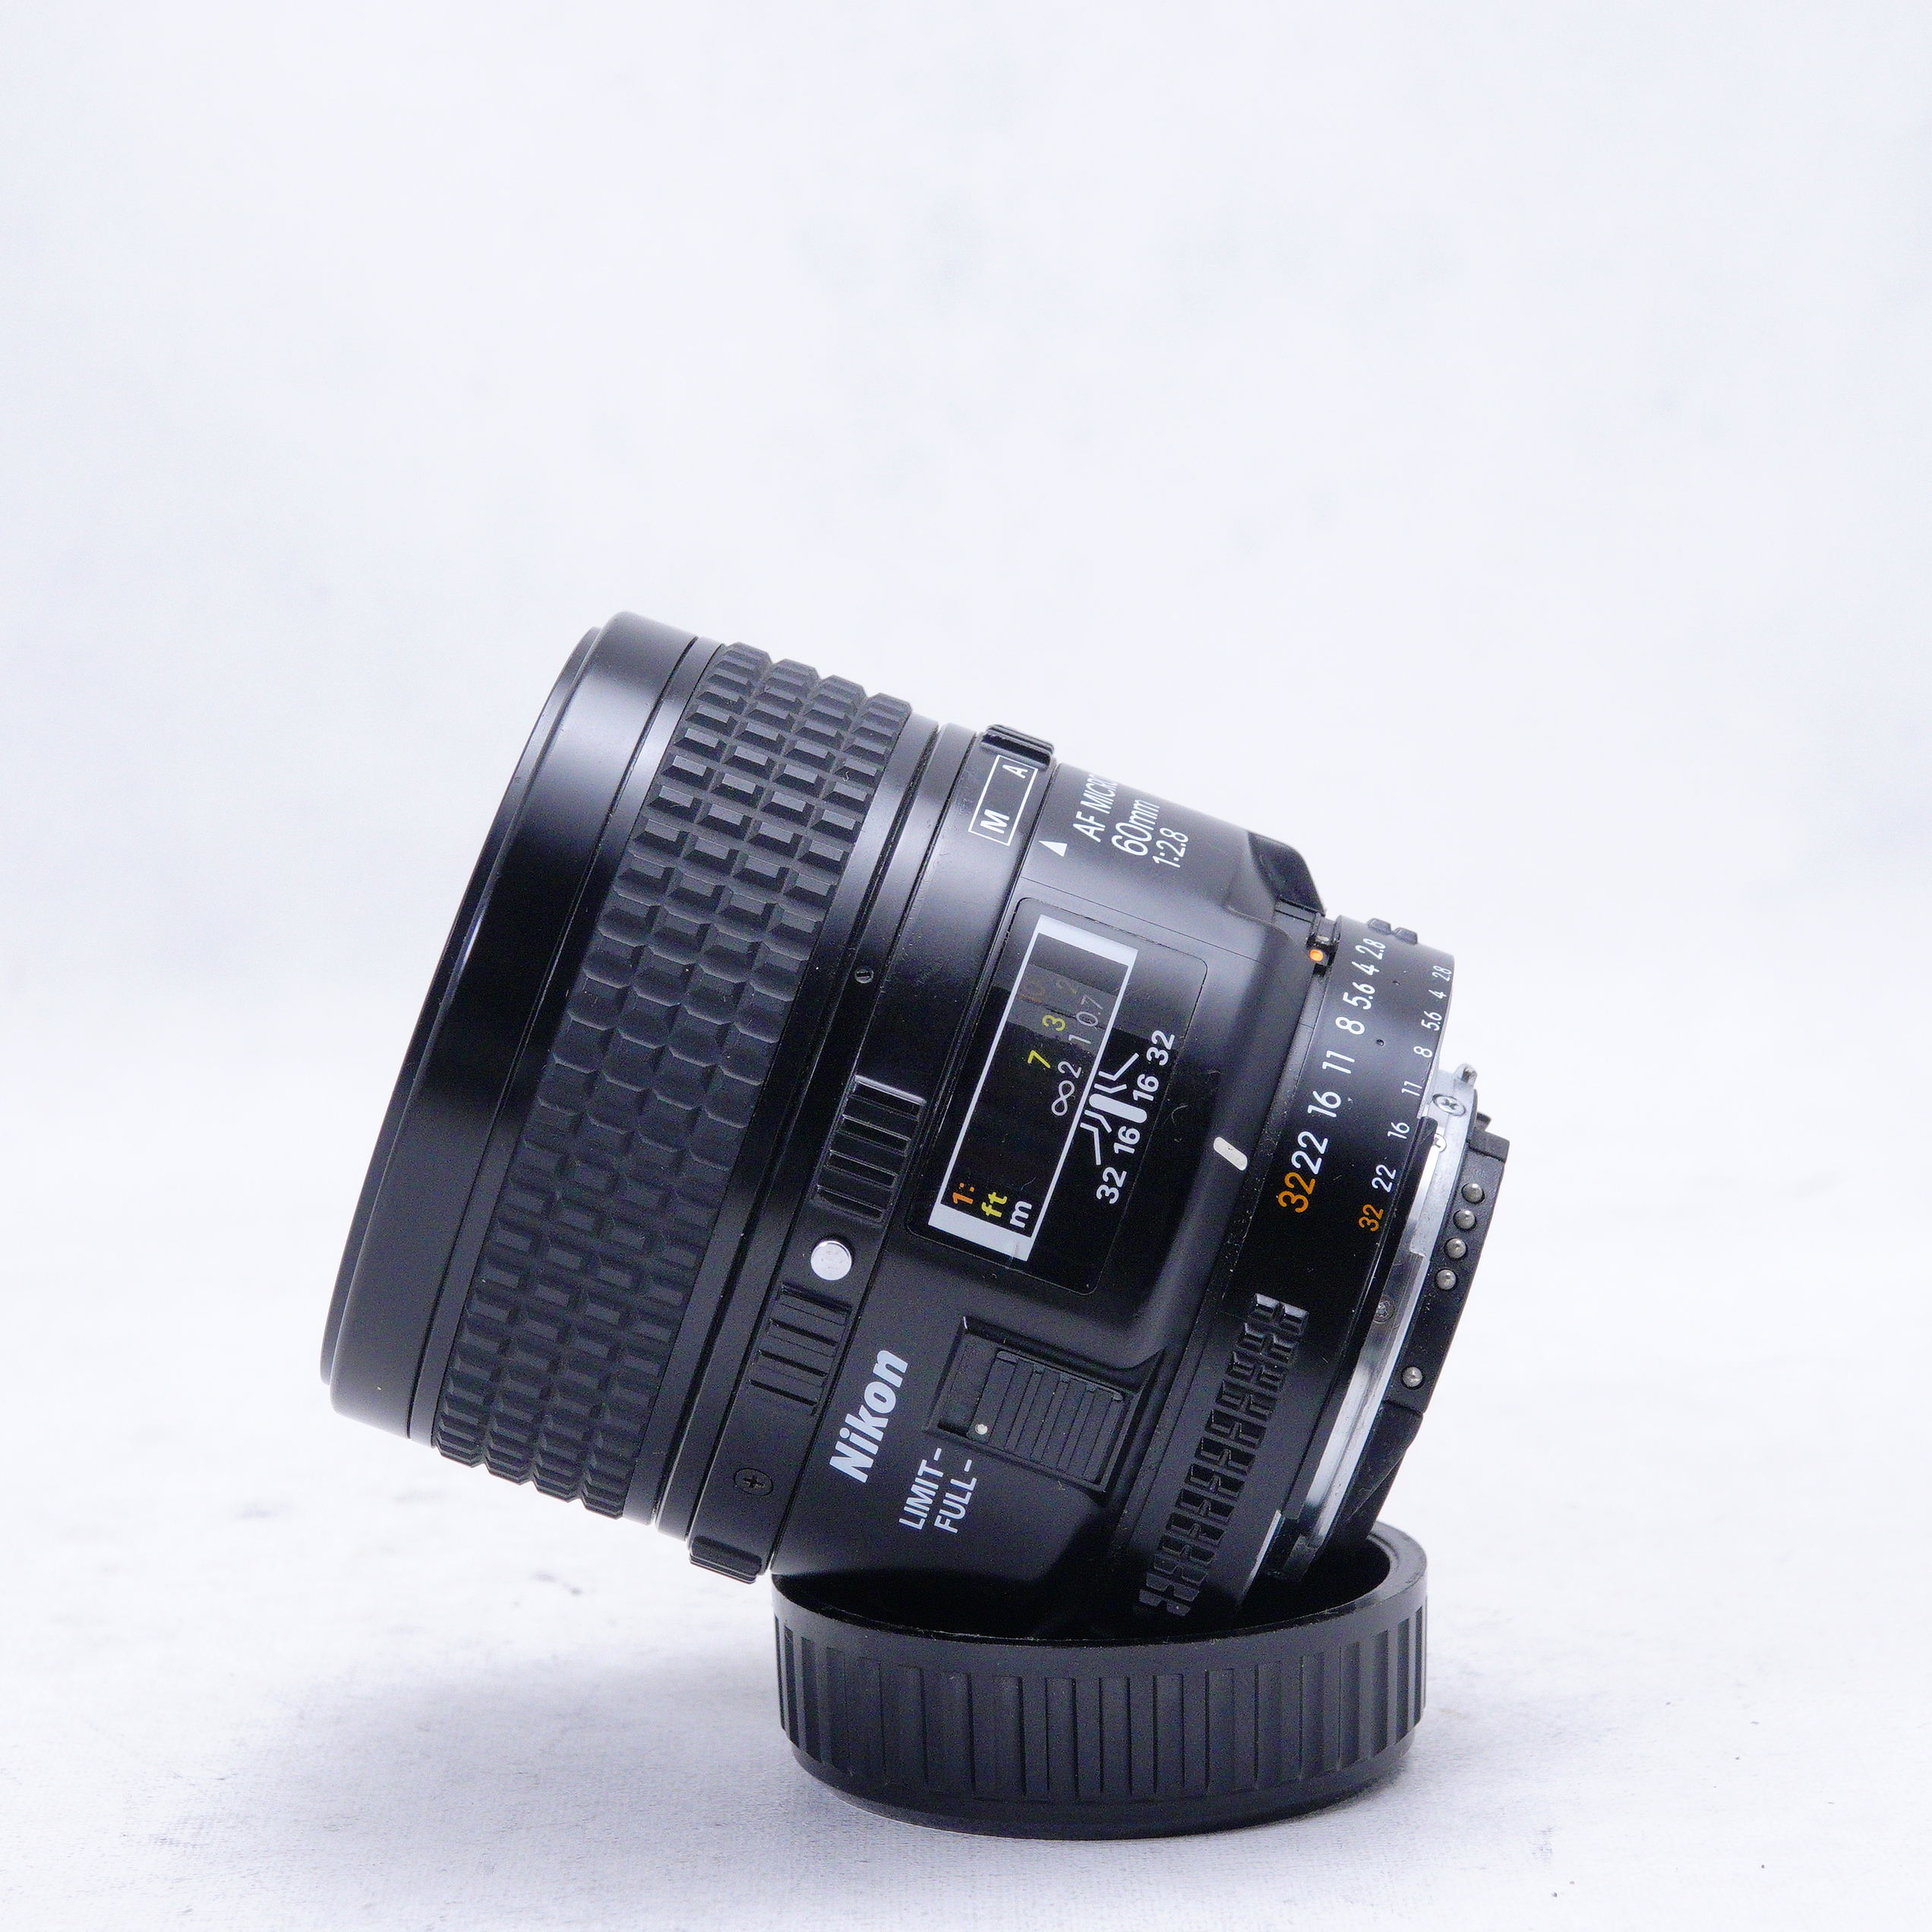 Nikon Micro-Nikkor 60mm f/2.8 - Usado